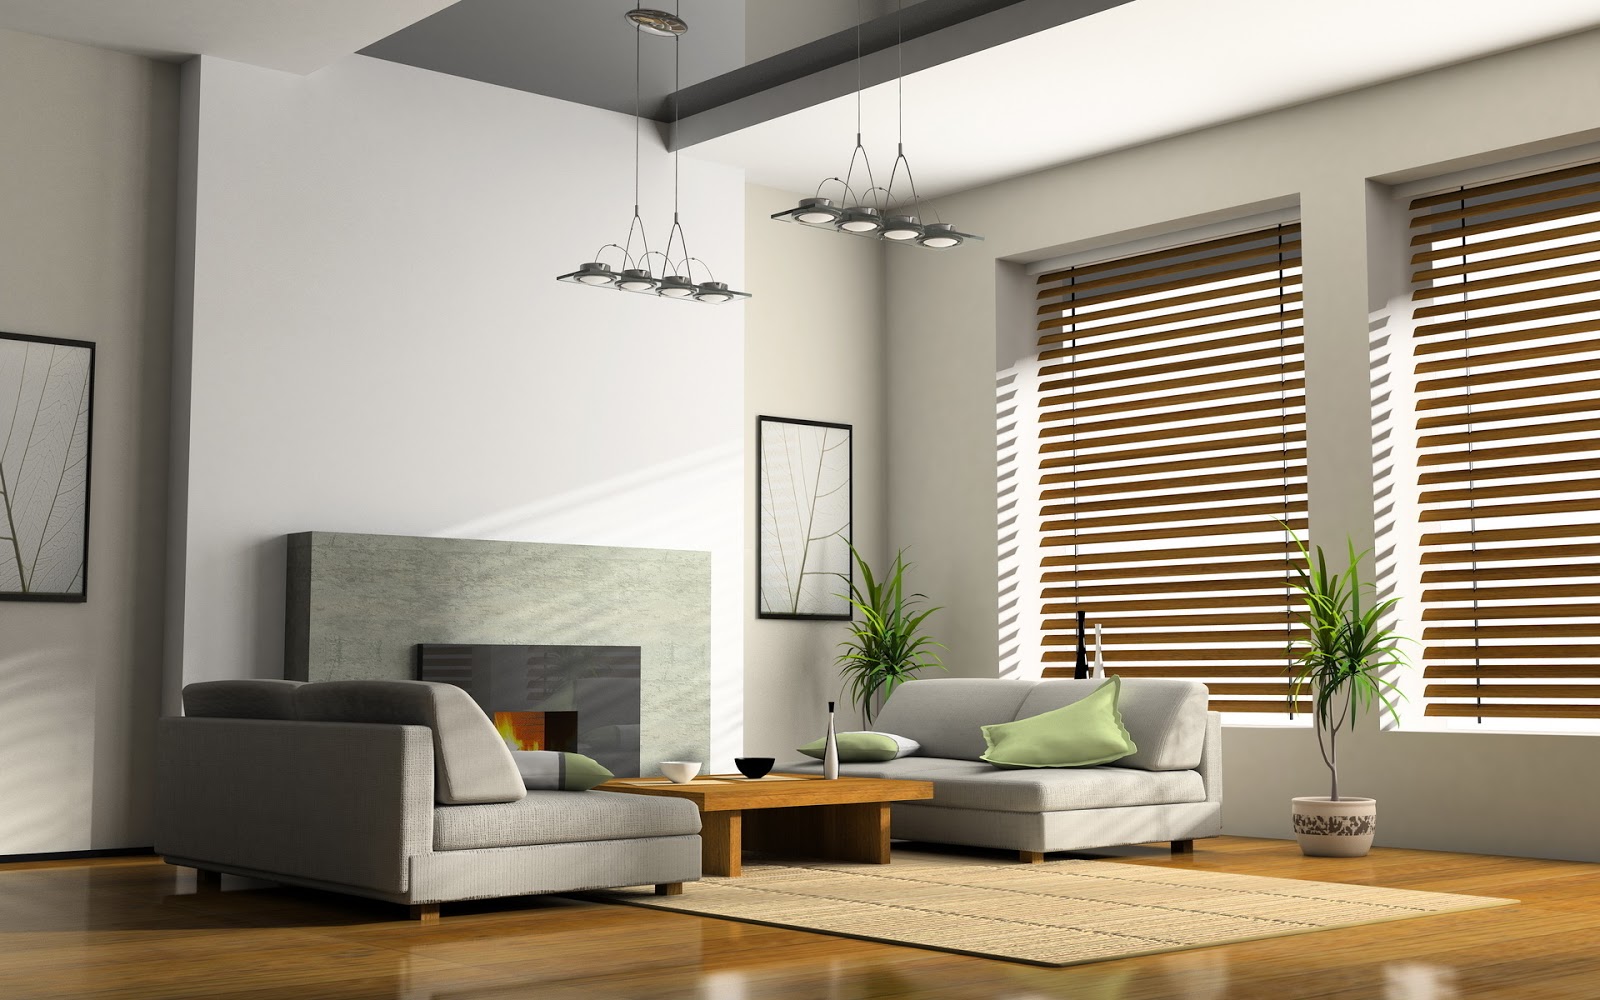  Home Interior Design Wallpaper for Living room